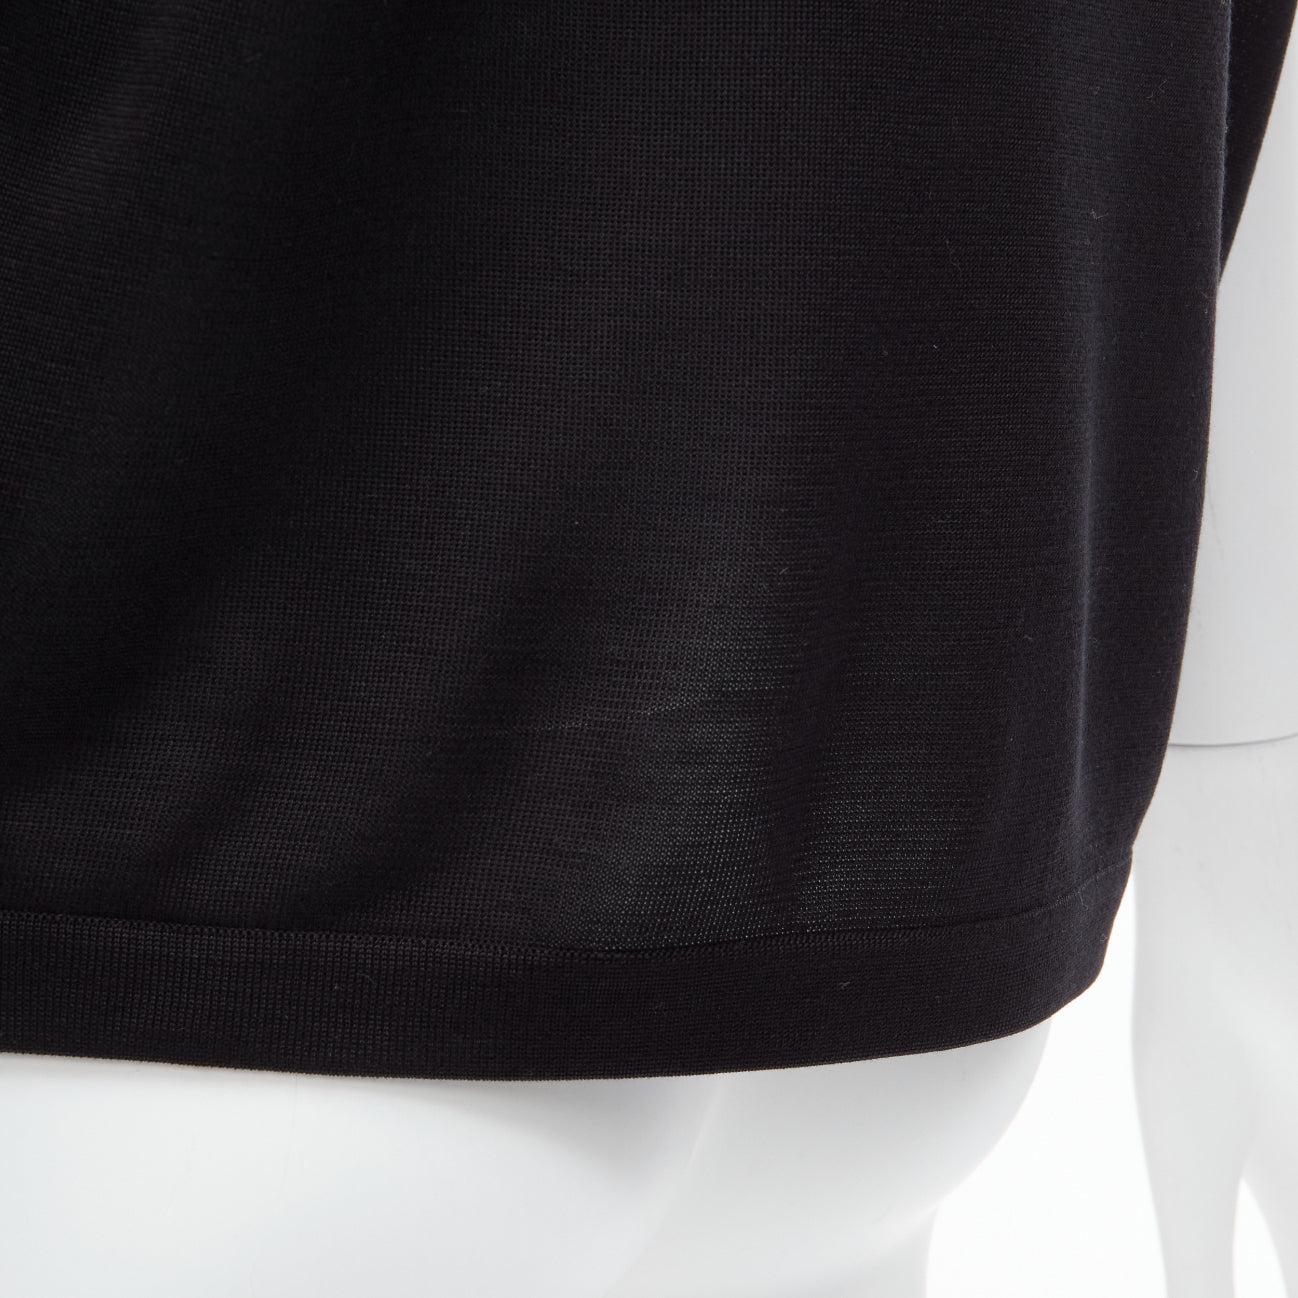 HERMES 100% silk black scarf print cap sleeve bateau neck tshirt top FR36 S For Sale 3